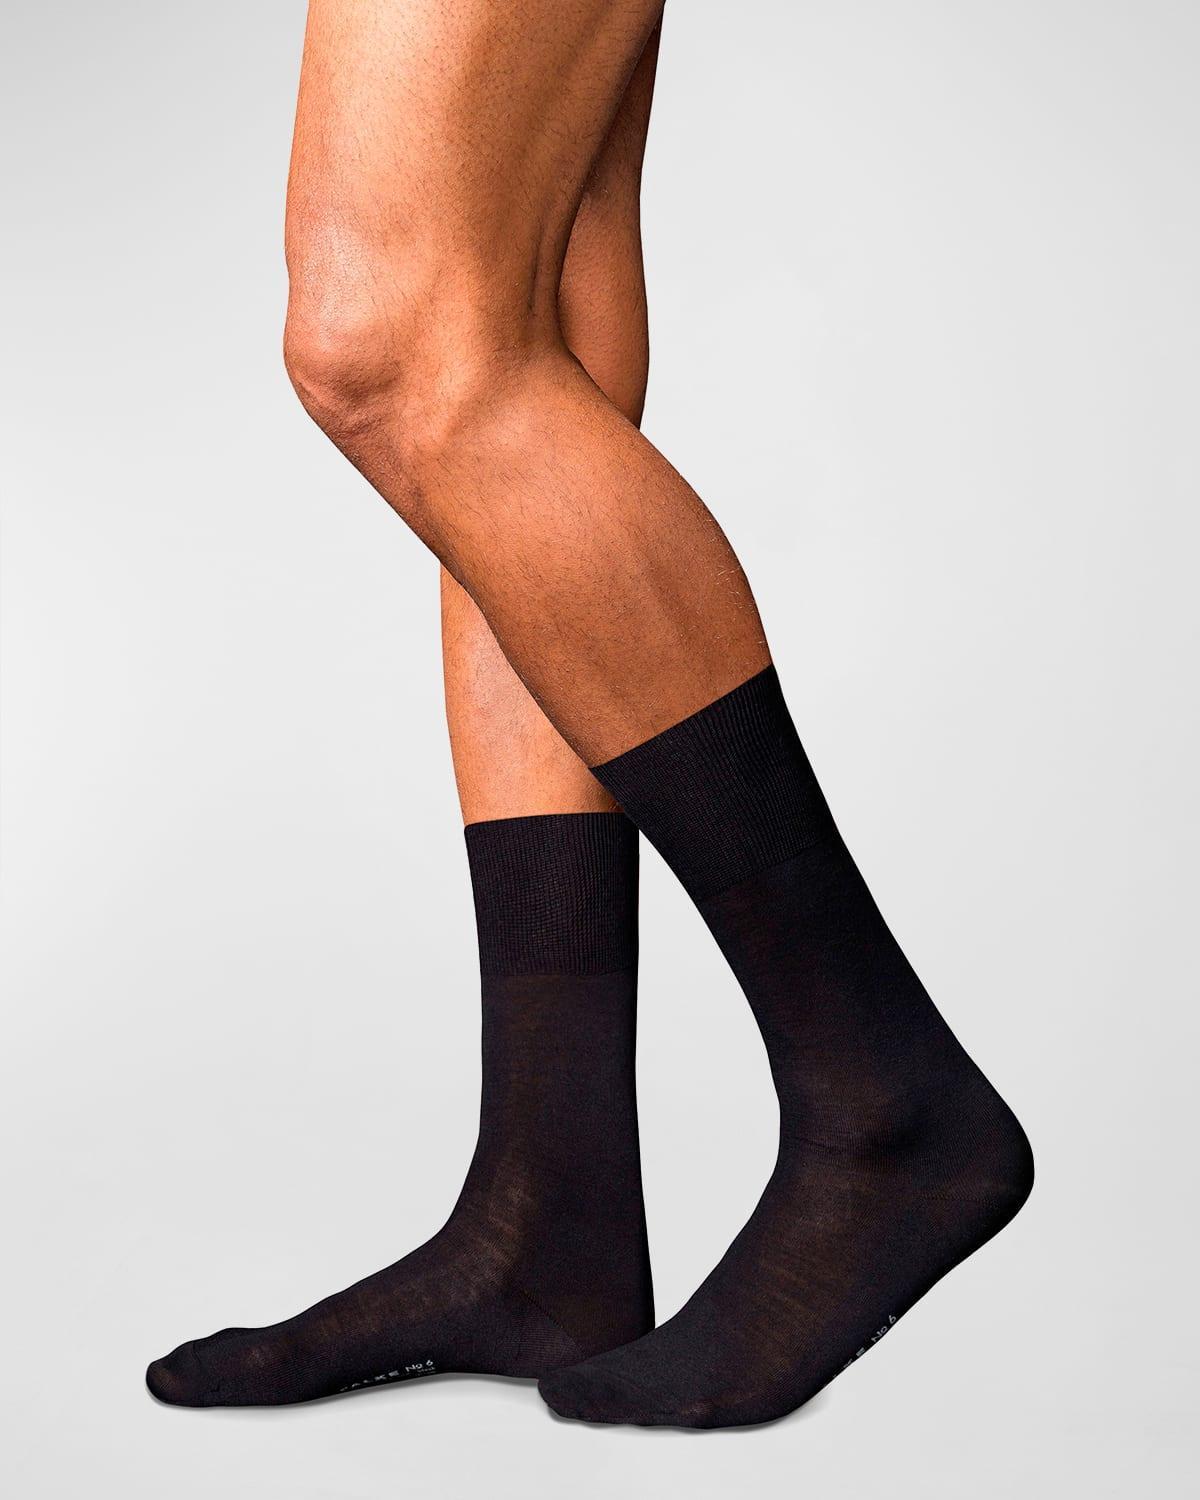 Falke No. 2 Cashmere Blend Dress Socks Product Image